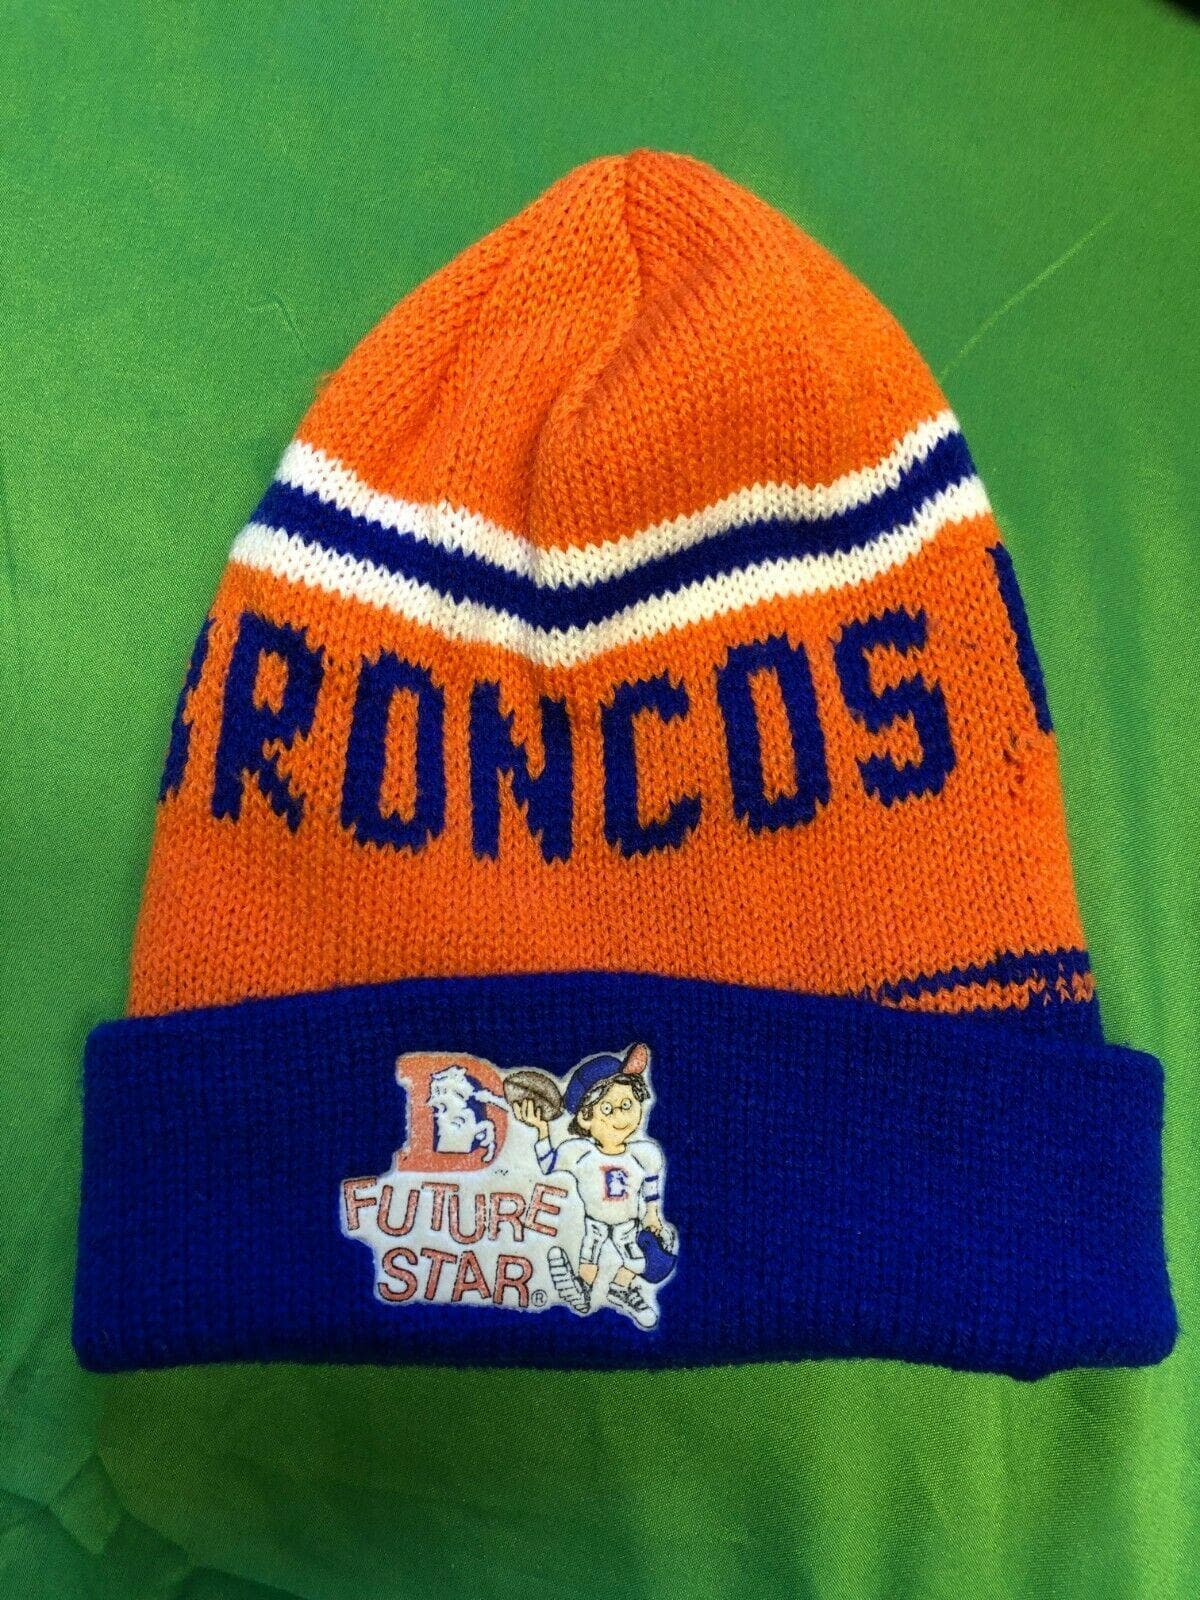 NFL Denver Broncos Future Star Youth Vintage Beanie hat